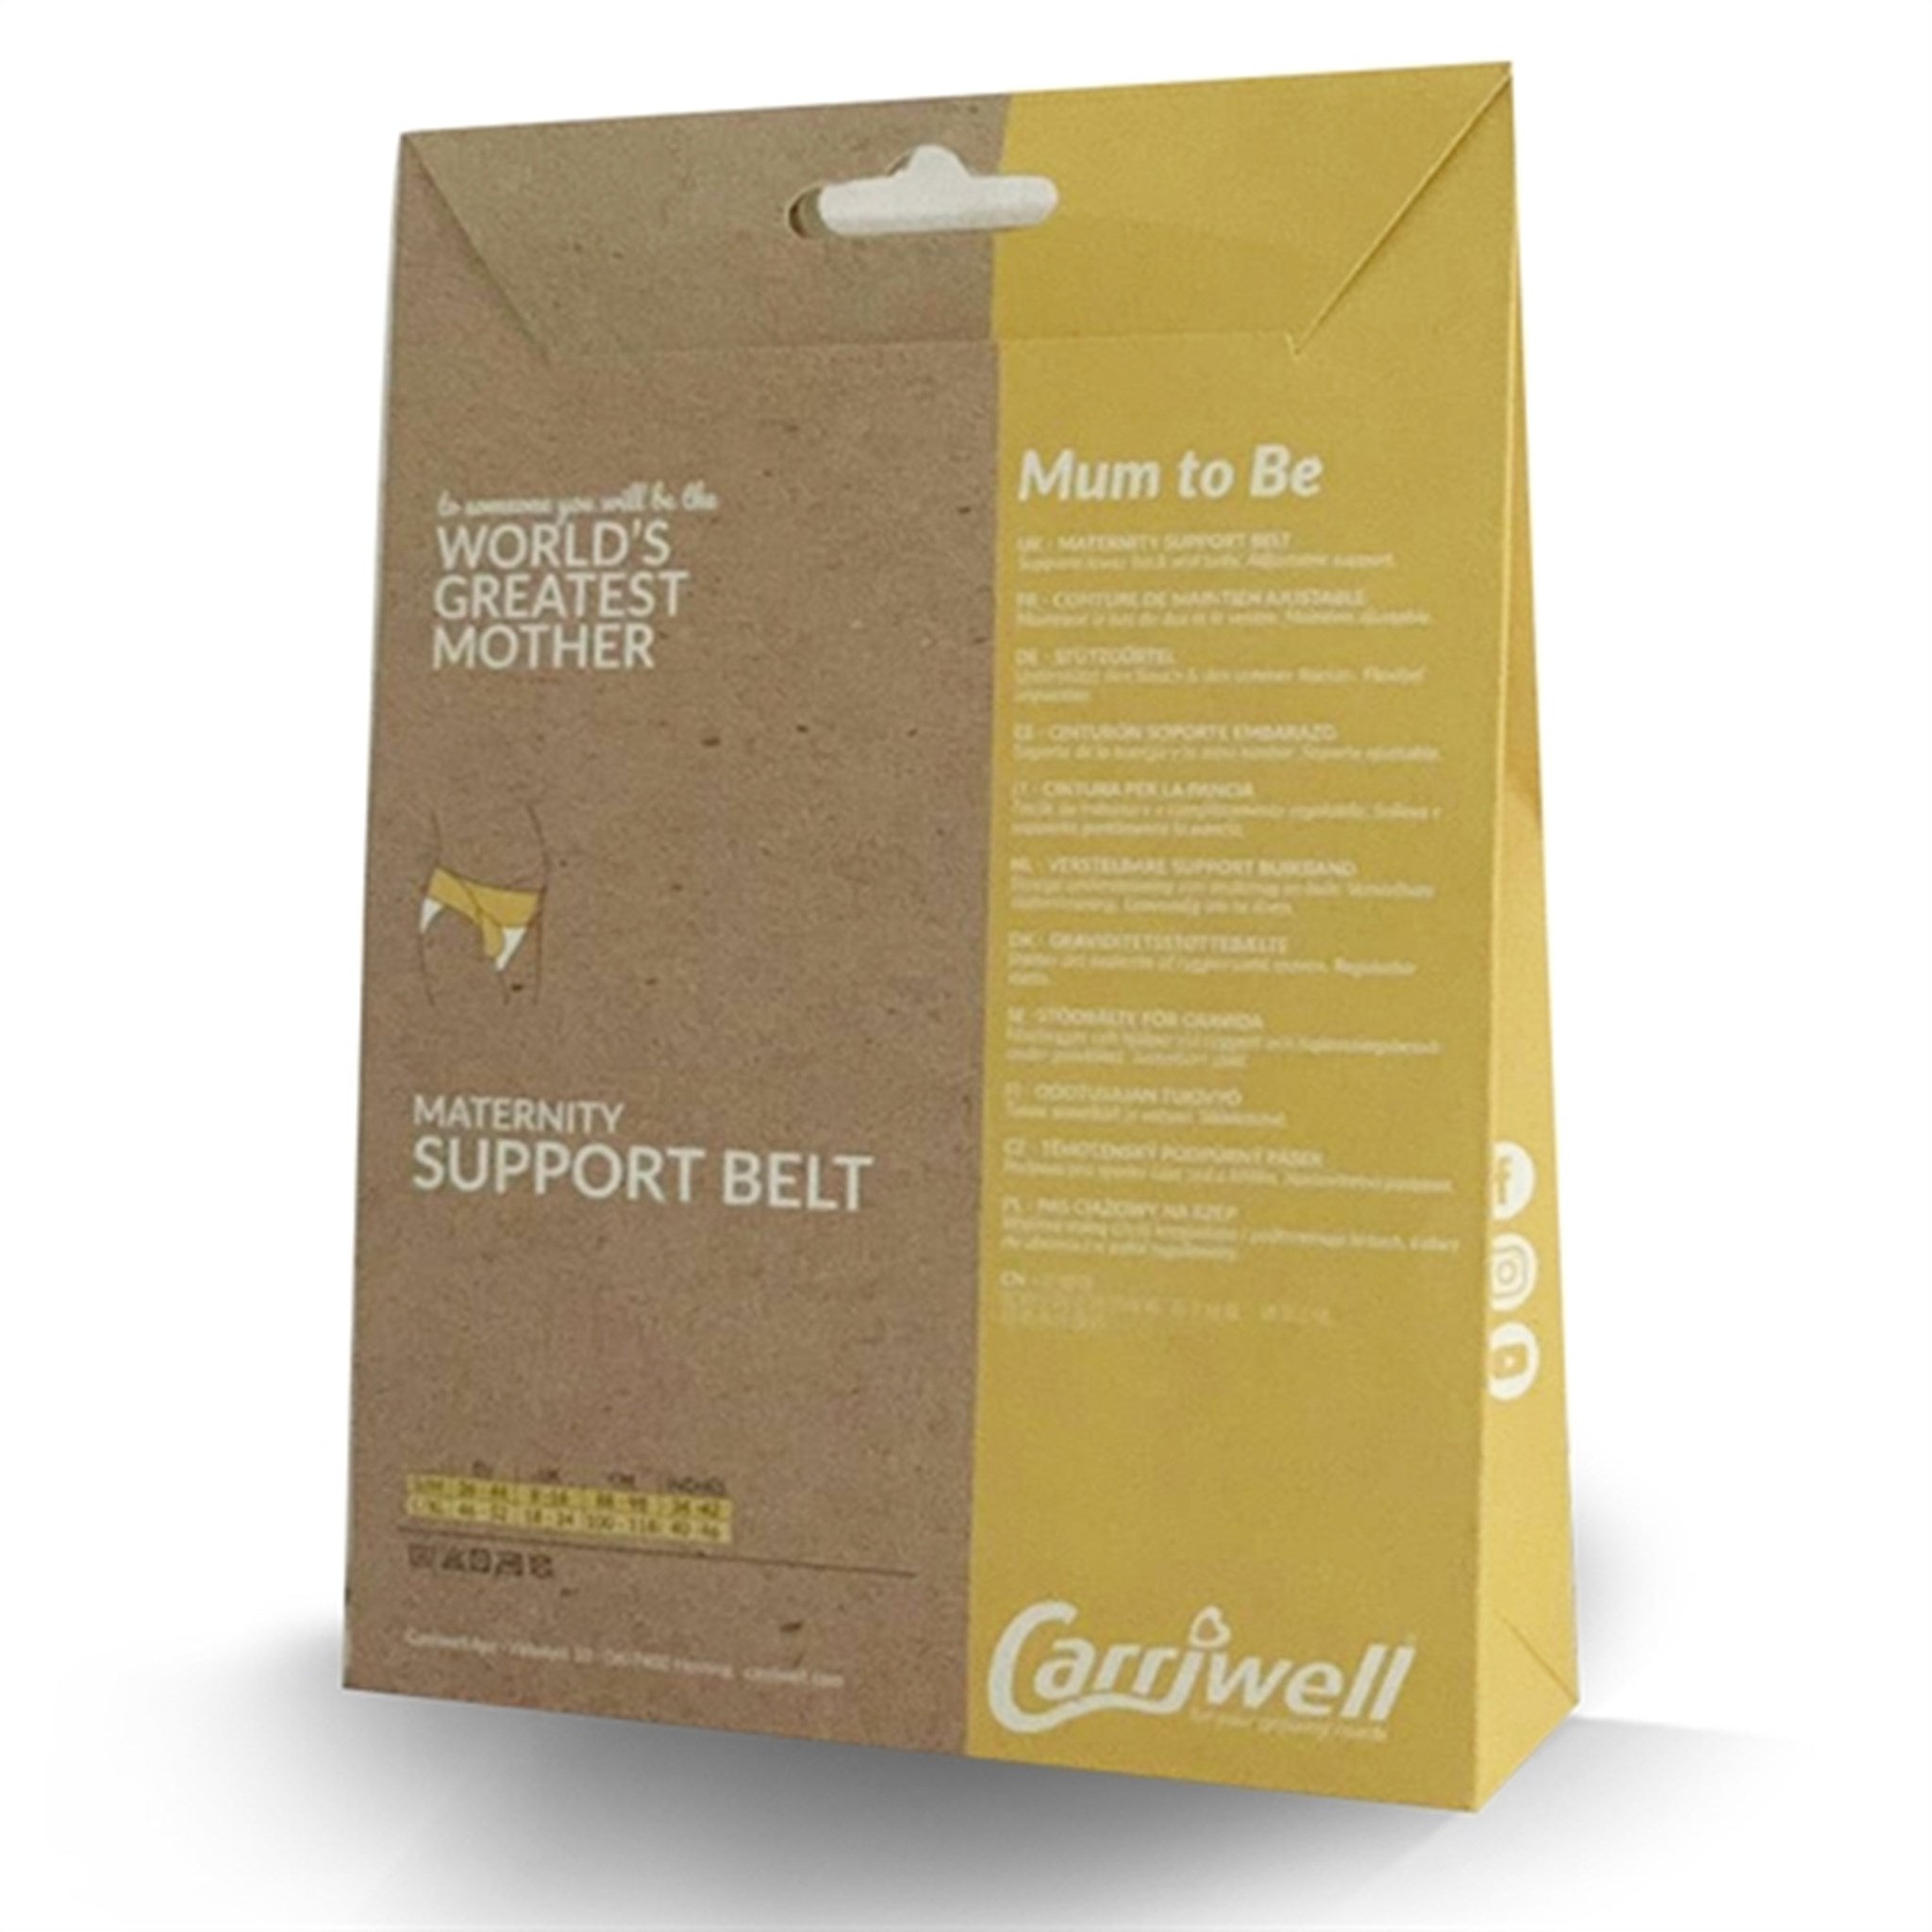 Carriwell Maternity Support Belt Black 6